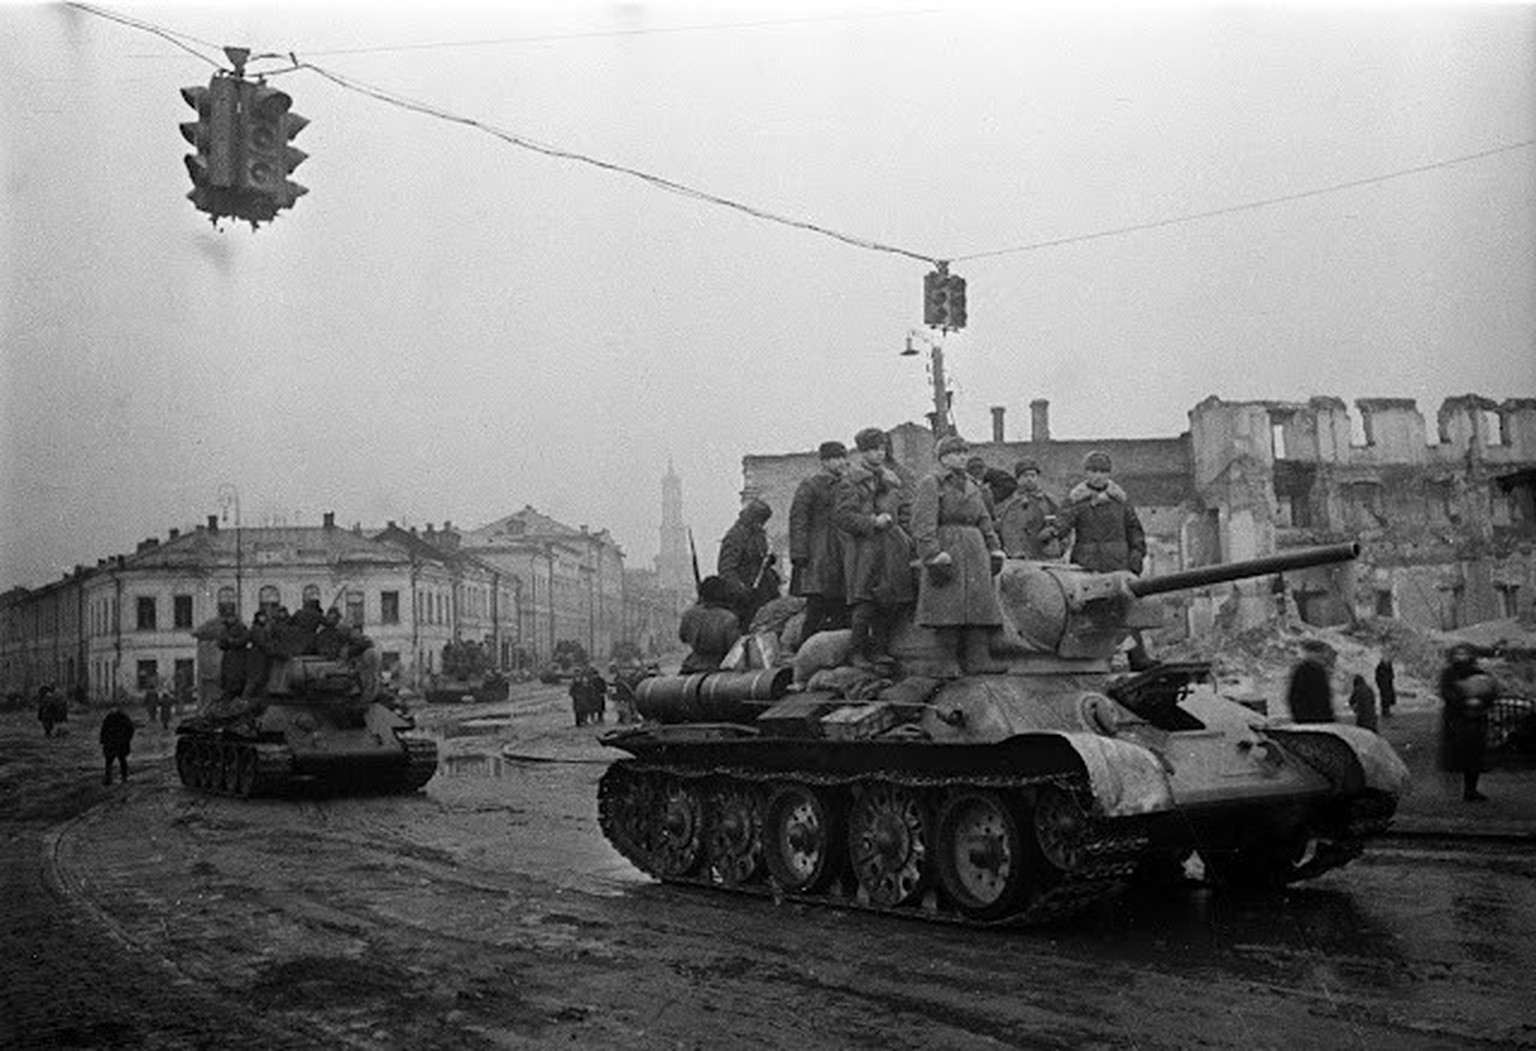 Soviet T-34/76 medium tanks roll through Moscow Avenue in liberated Kharkov during the Belgorod-Kharkov offensive in August 1943.
http://waralbum.ru/237907/